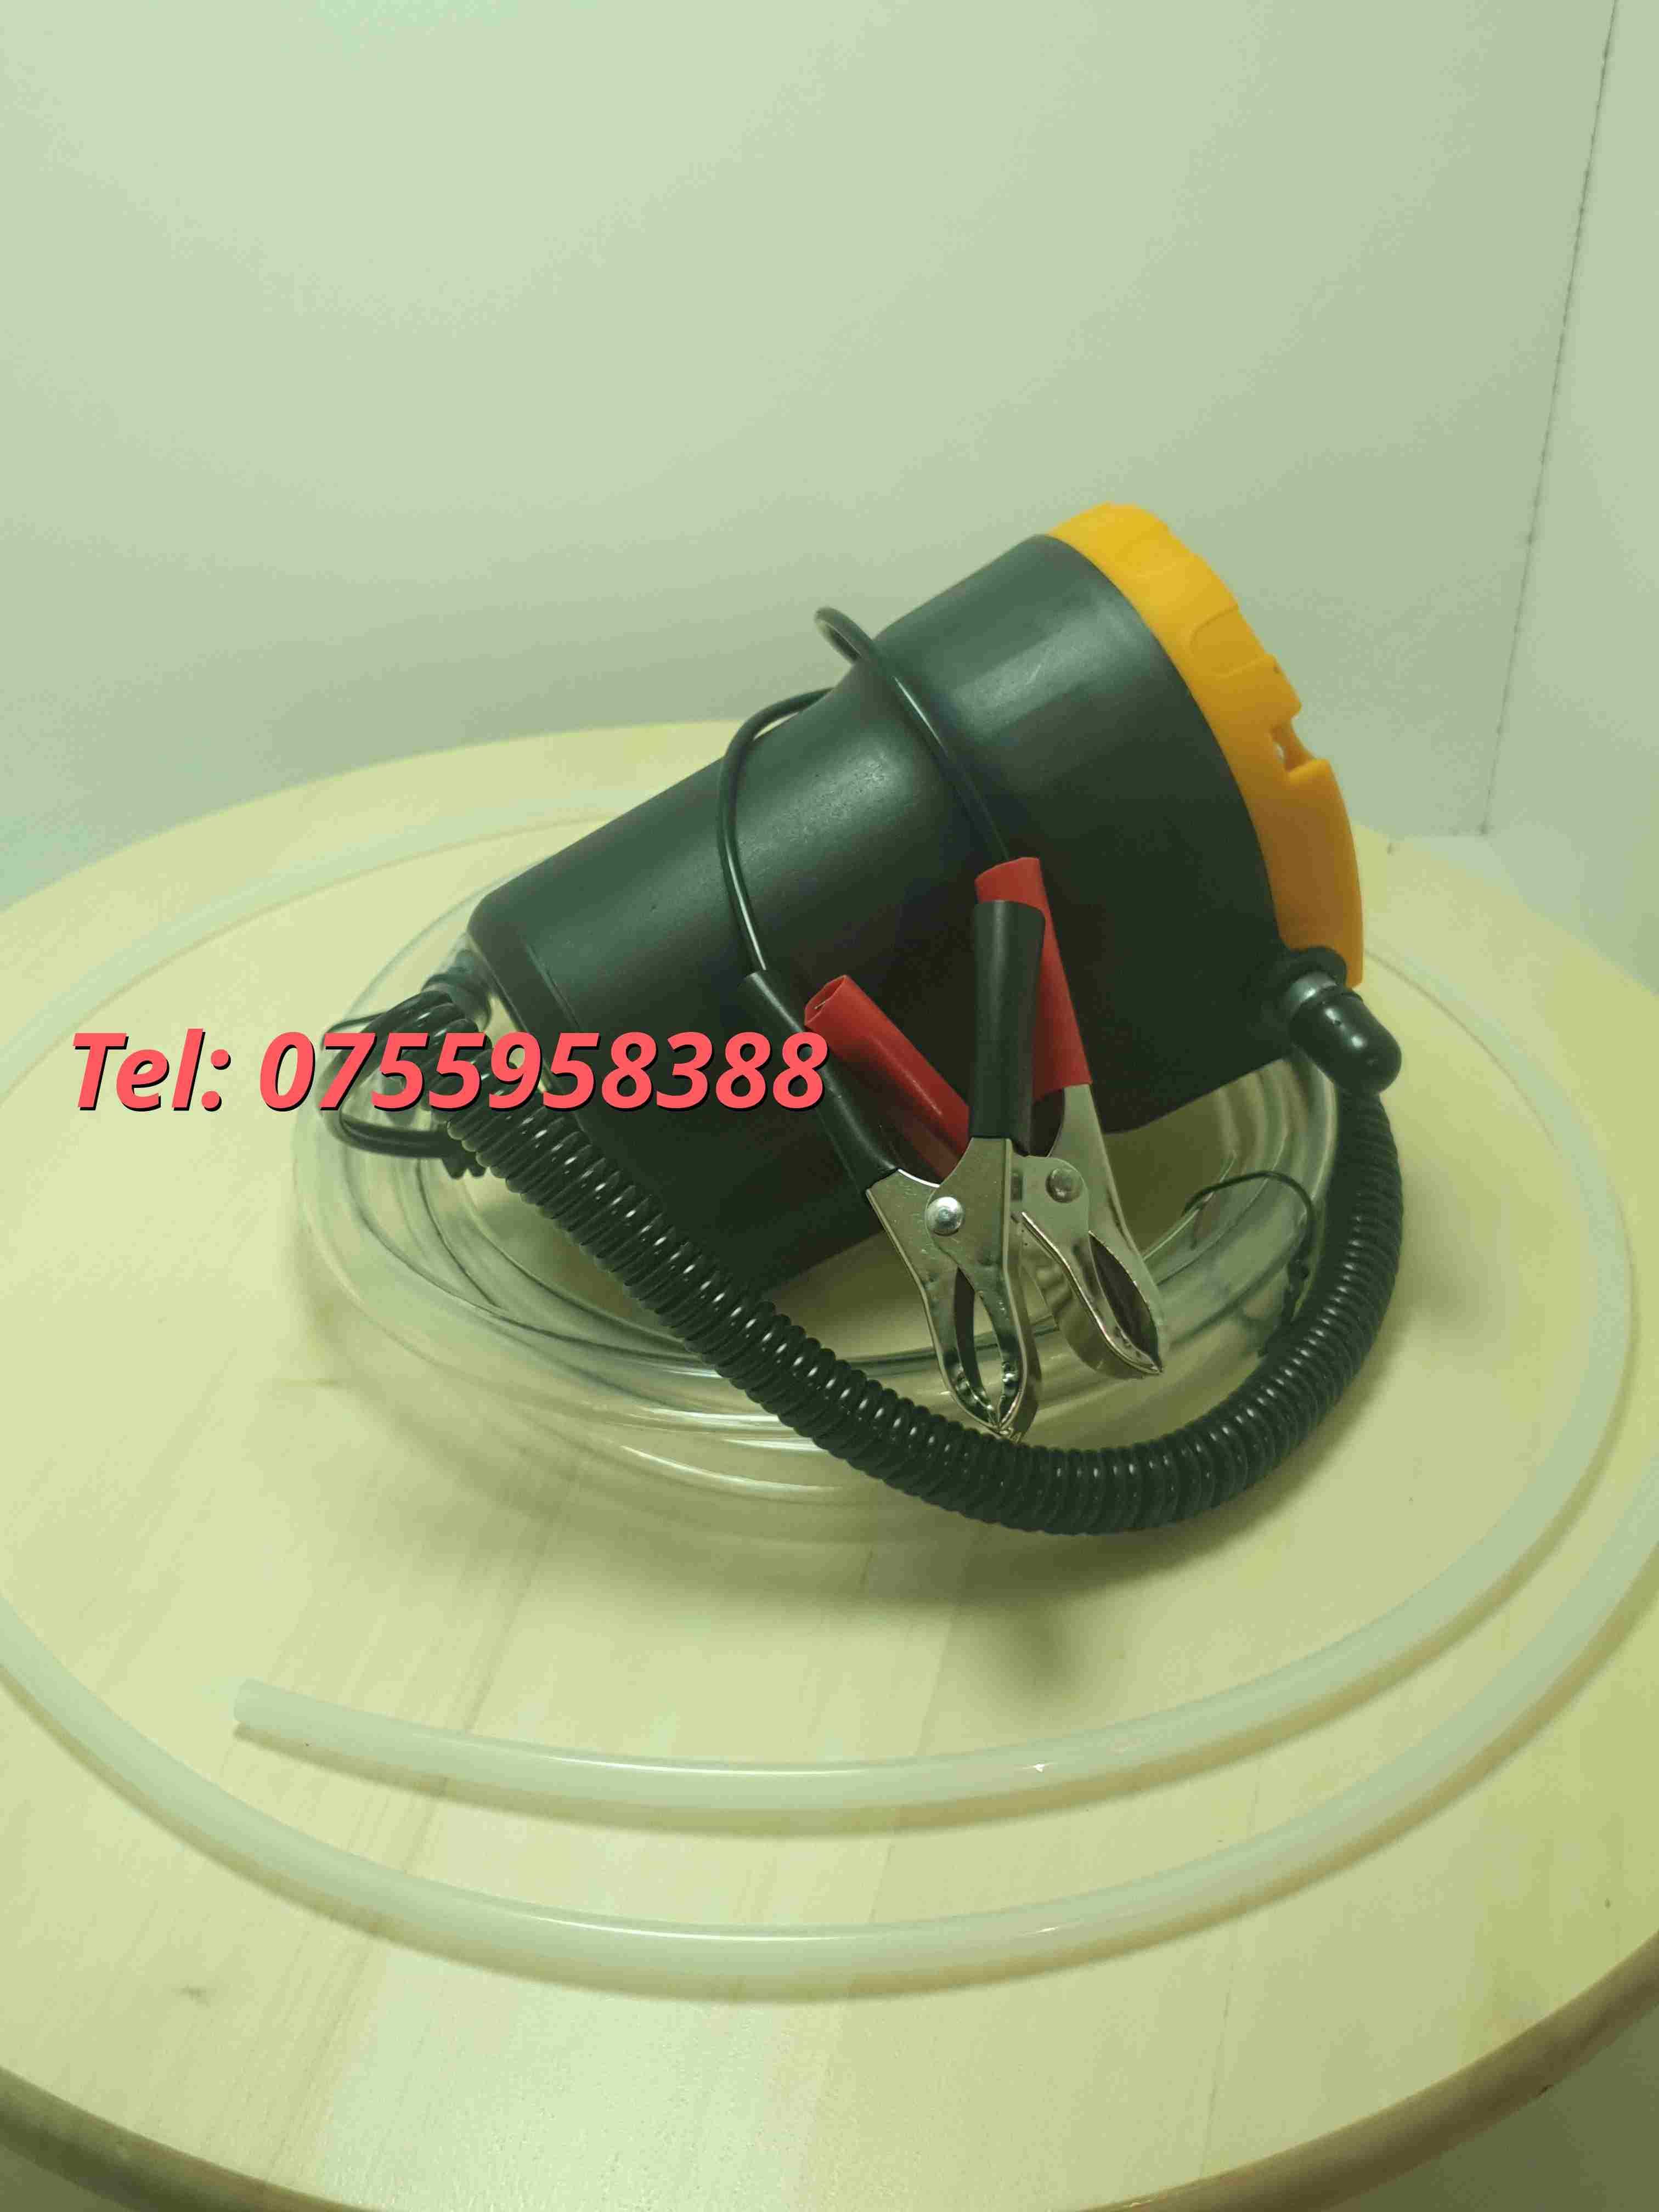 Pompa Extractor 150lh 12v